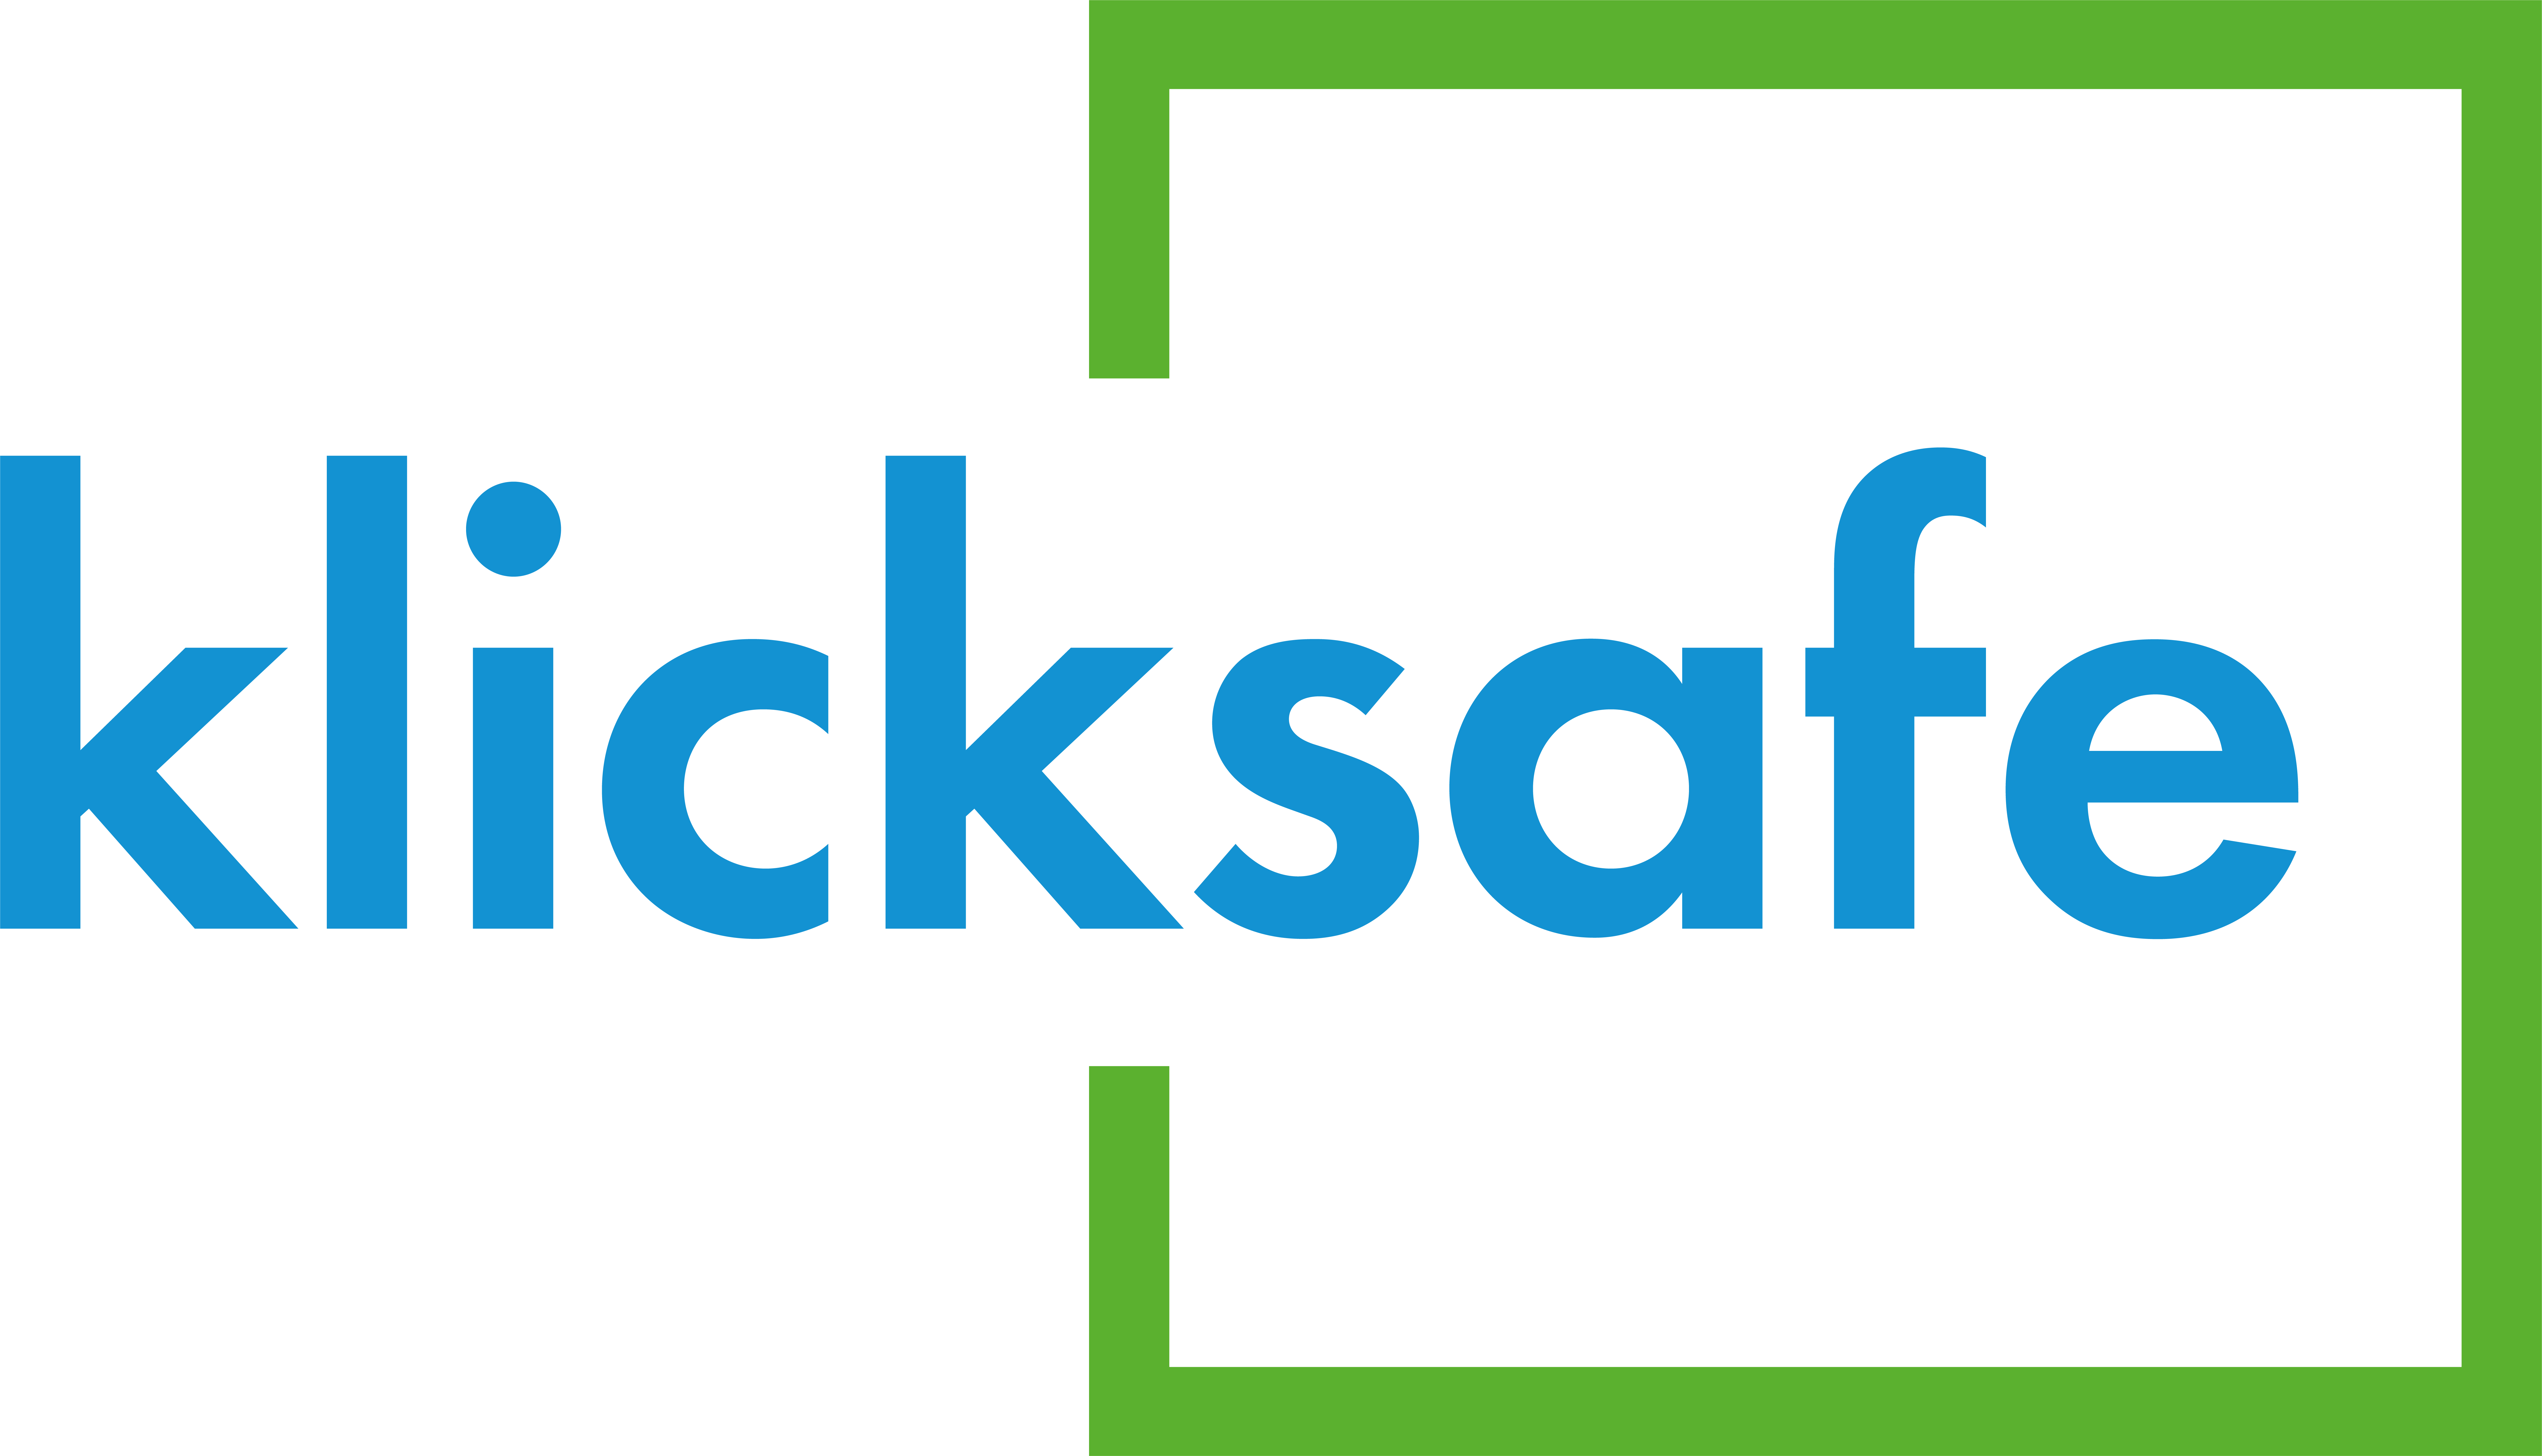 Logo klicksafe